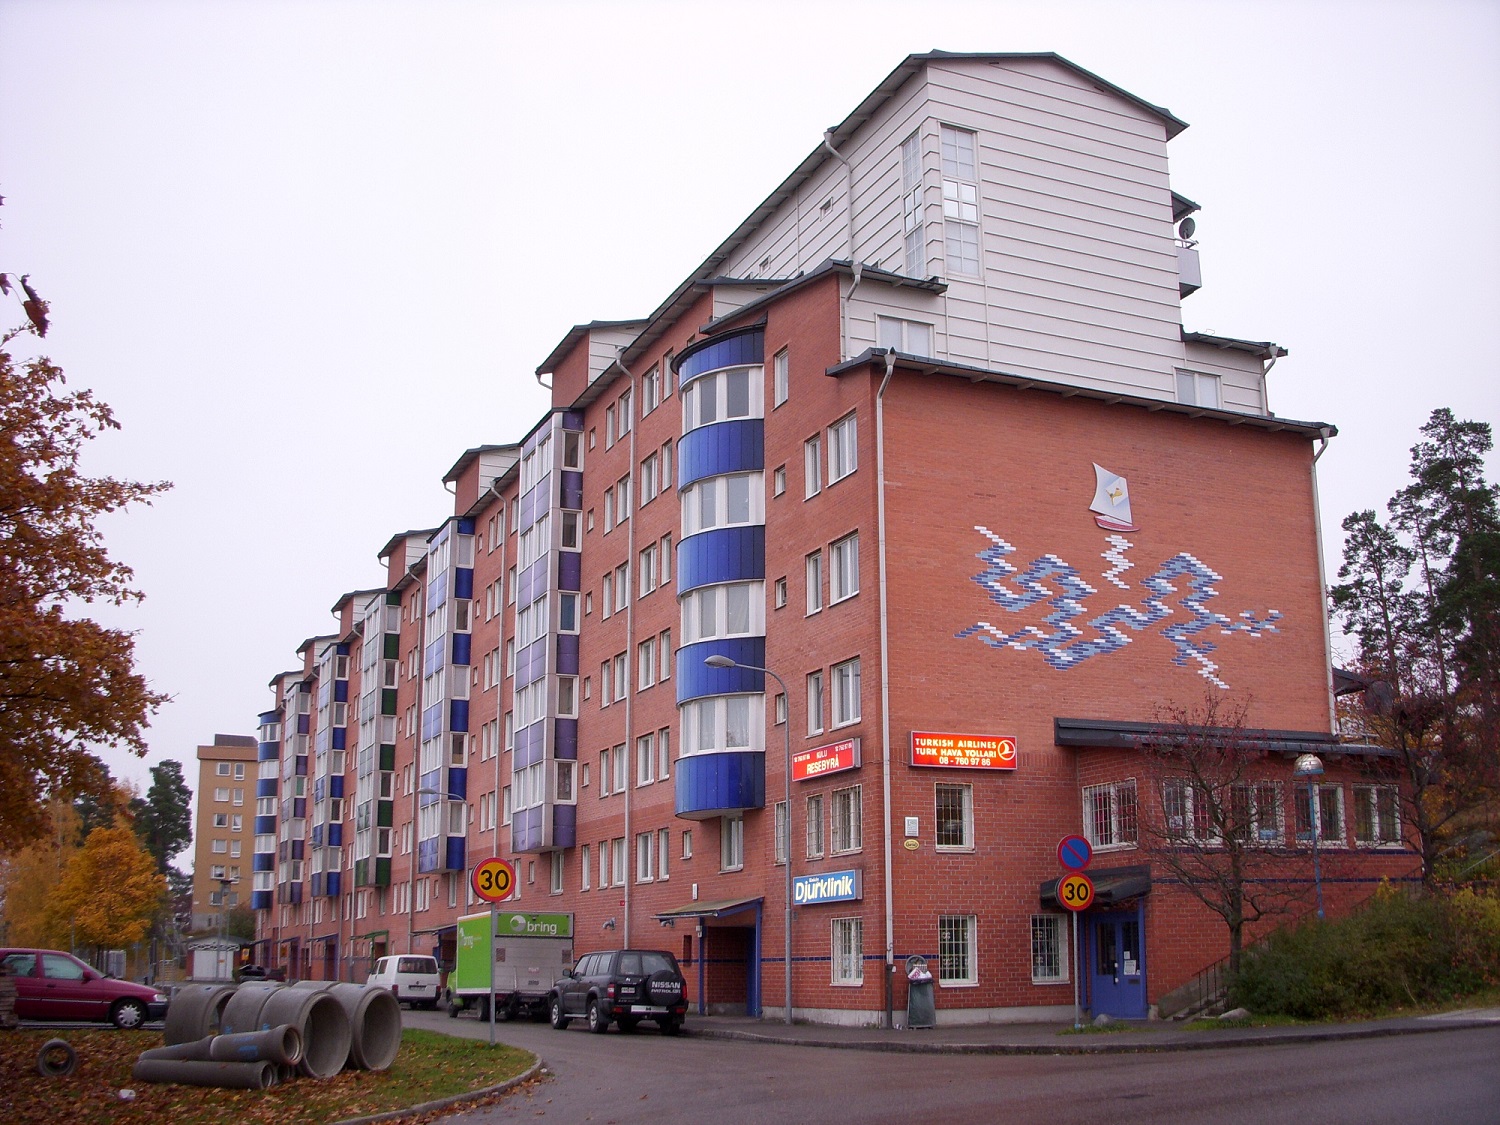 Housing block with red bricks.